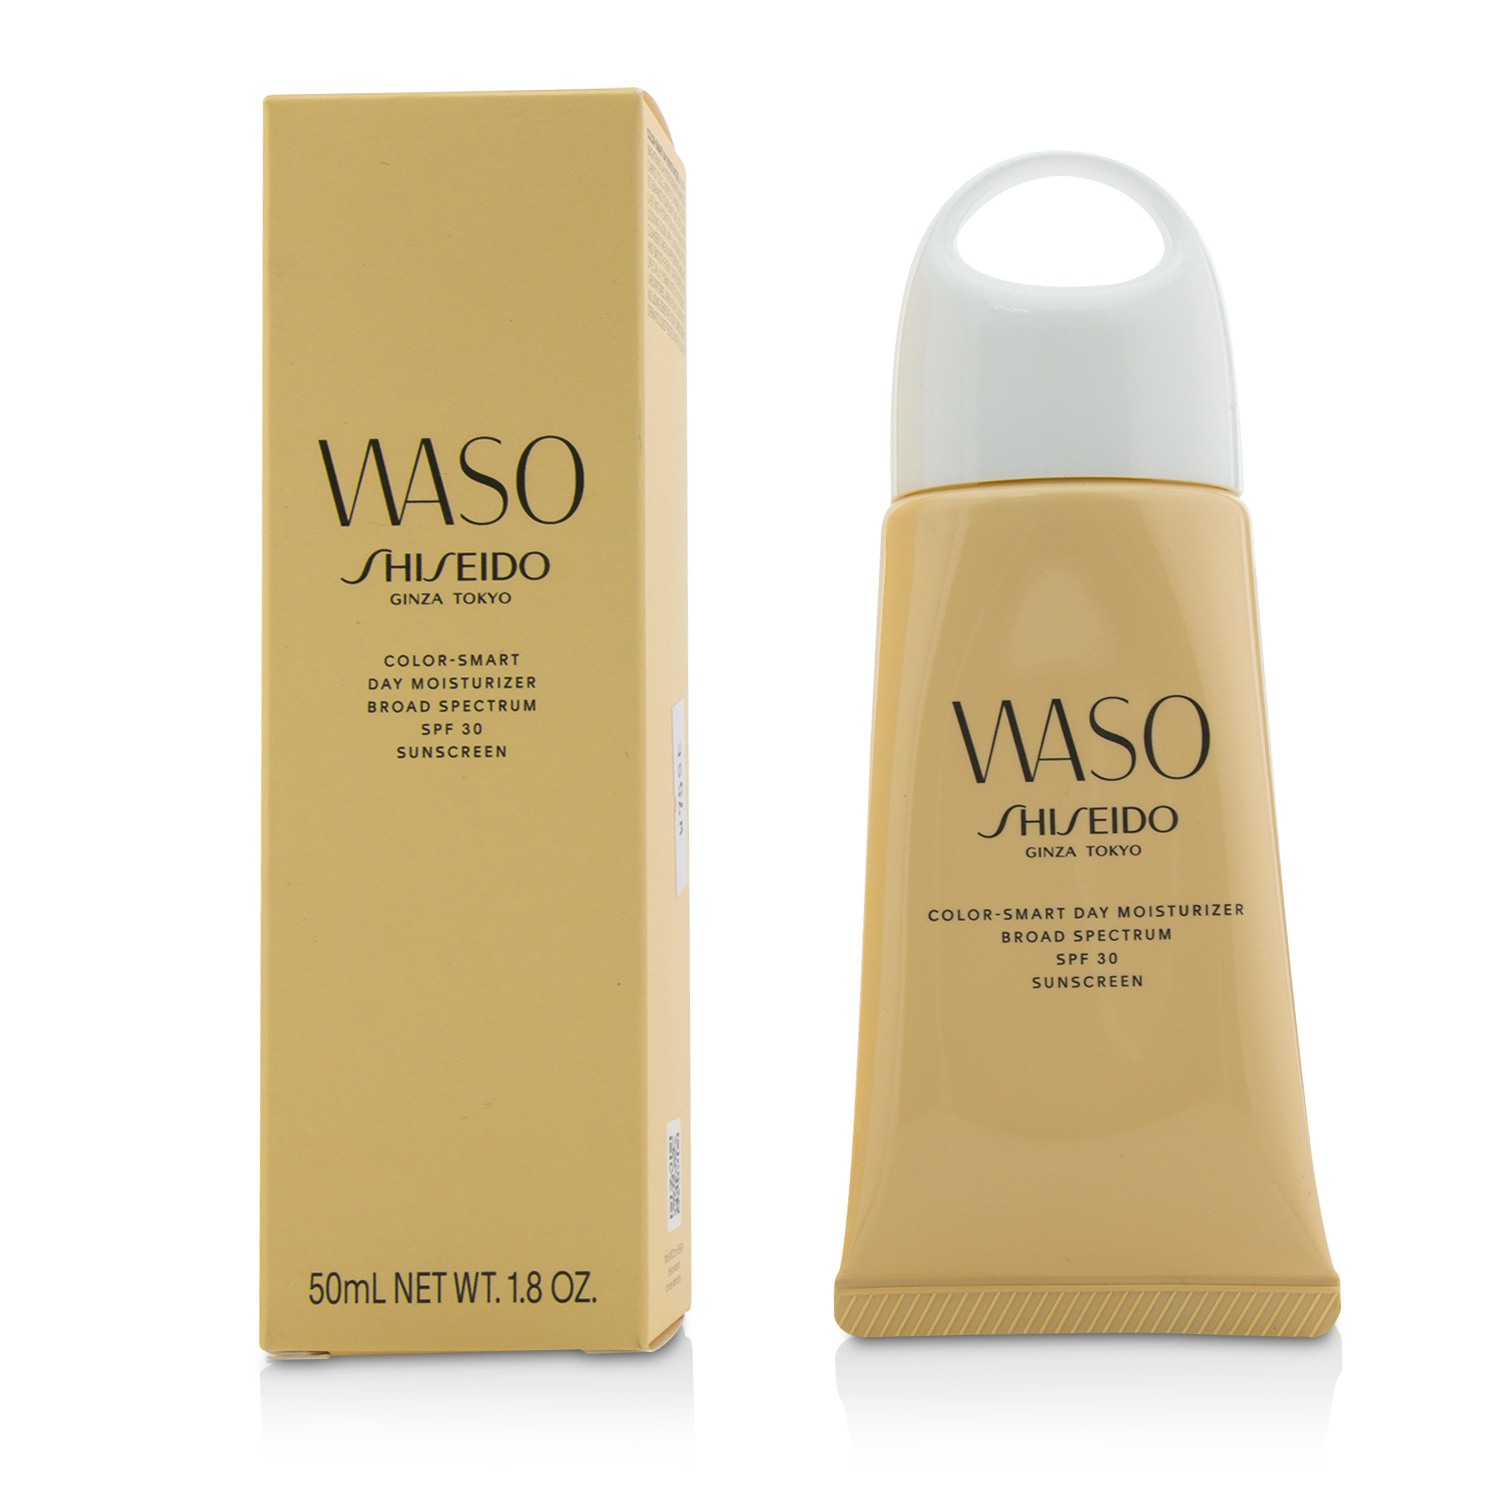 Waso Color-Smart Day Moisturizer SPF 30 Shiseido Image